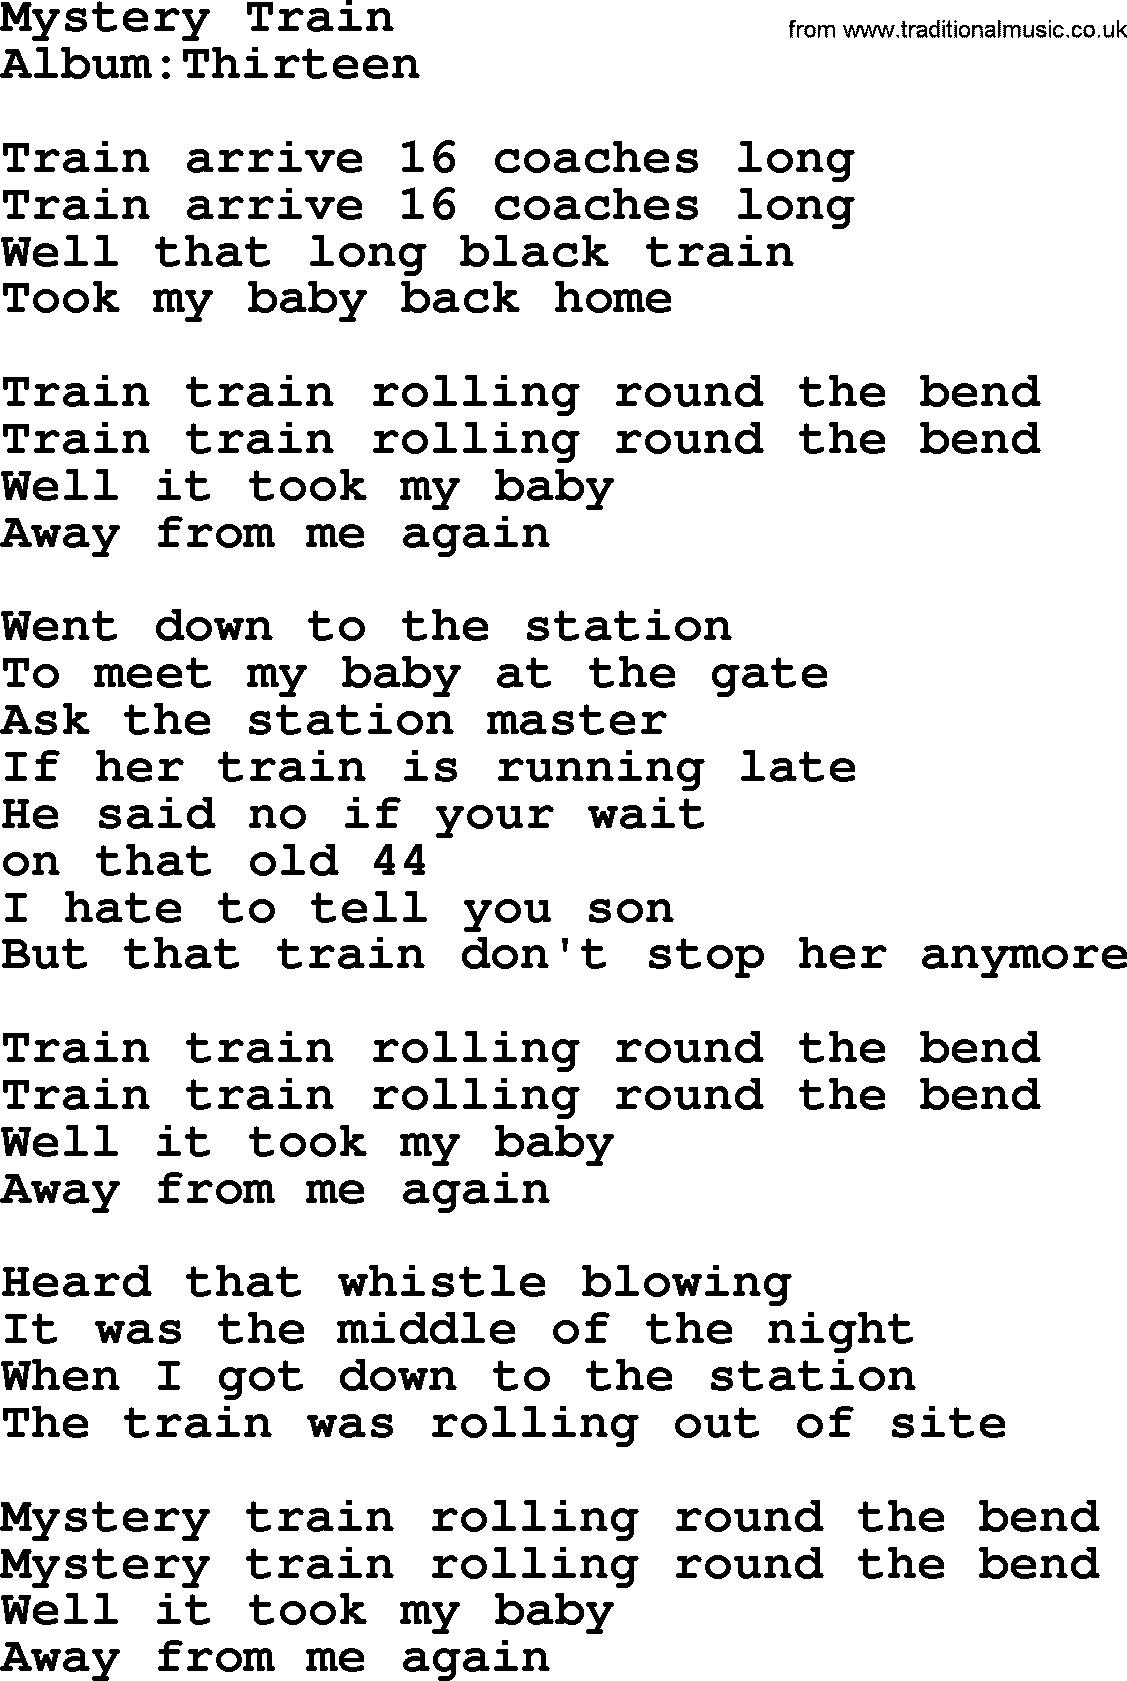 Emmylou Harris song: Mystery Train lyrics